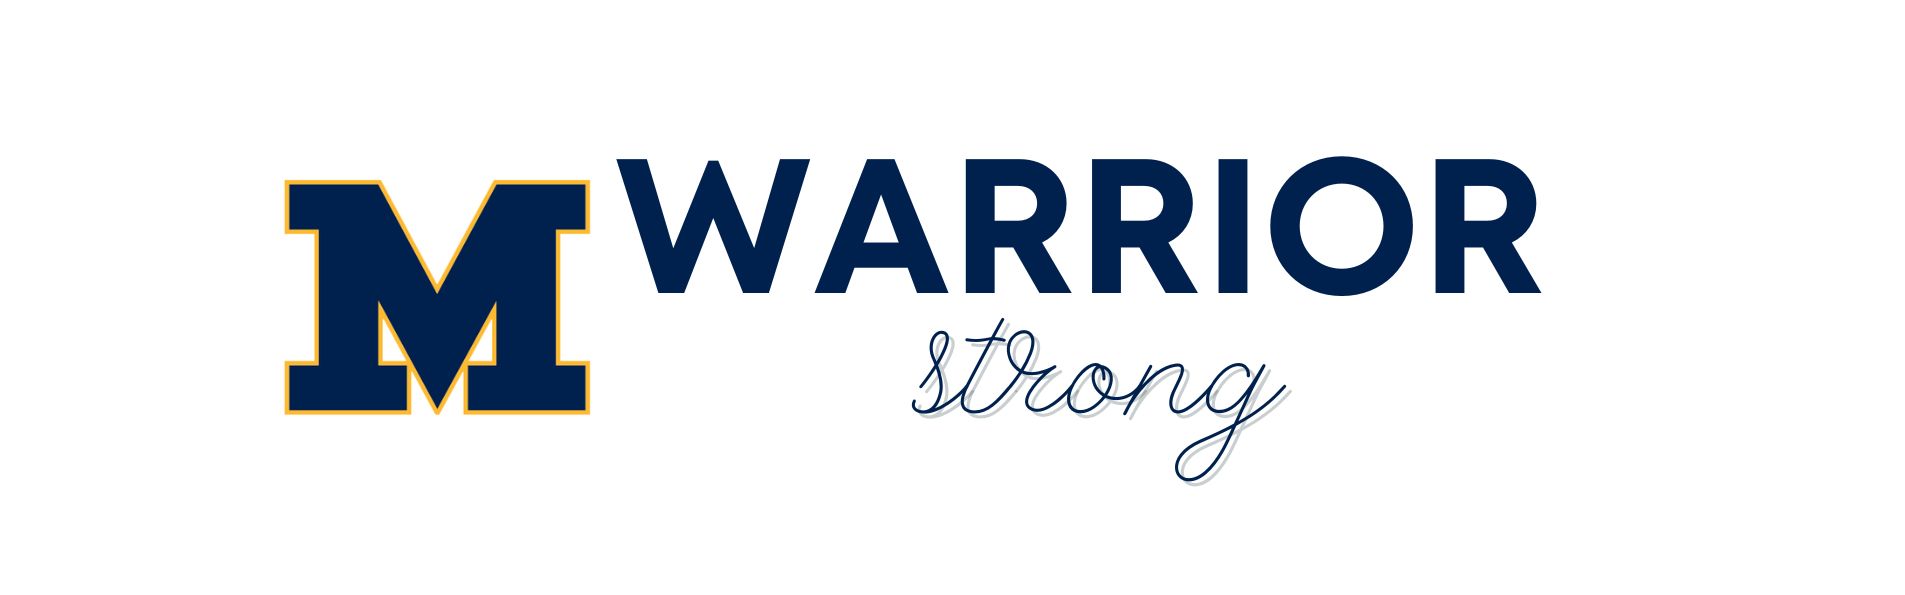 warrior strong